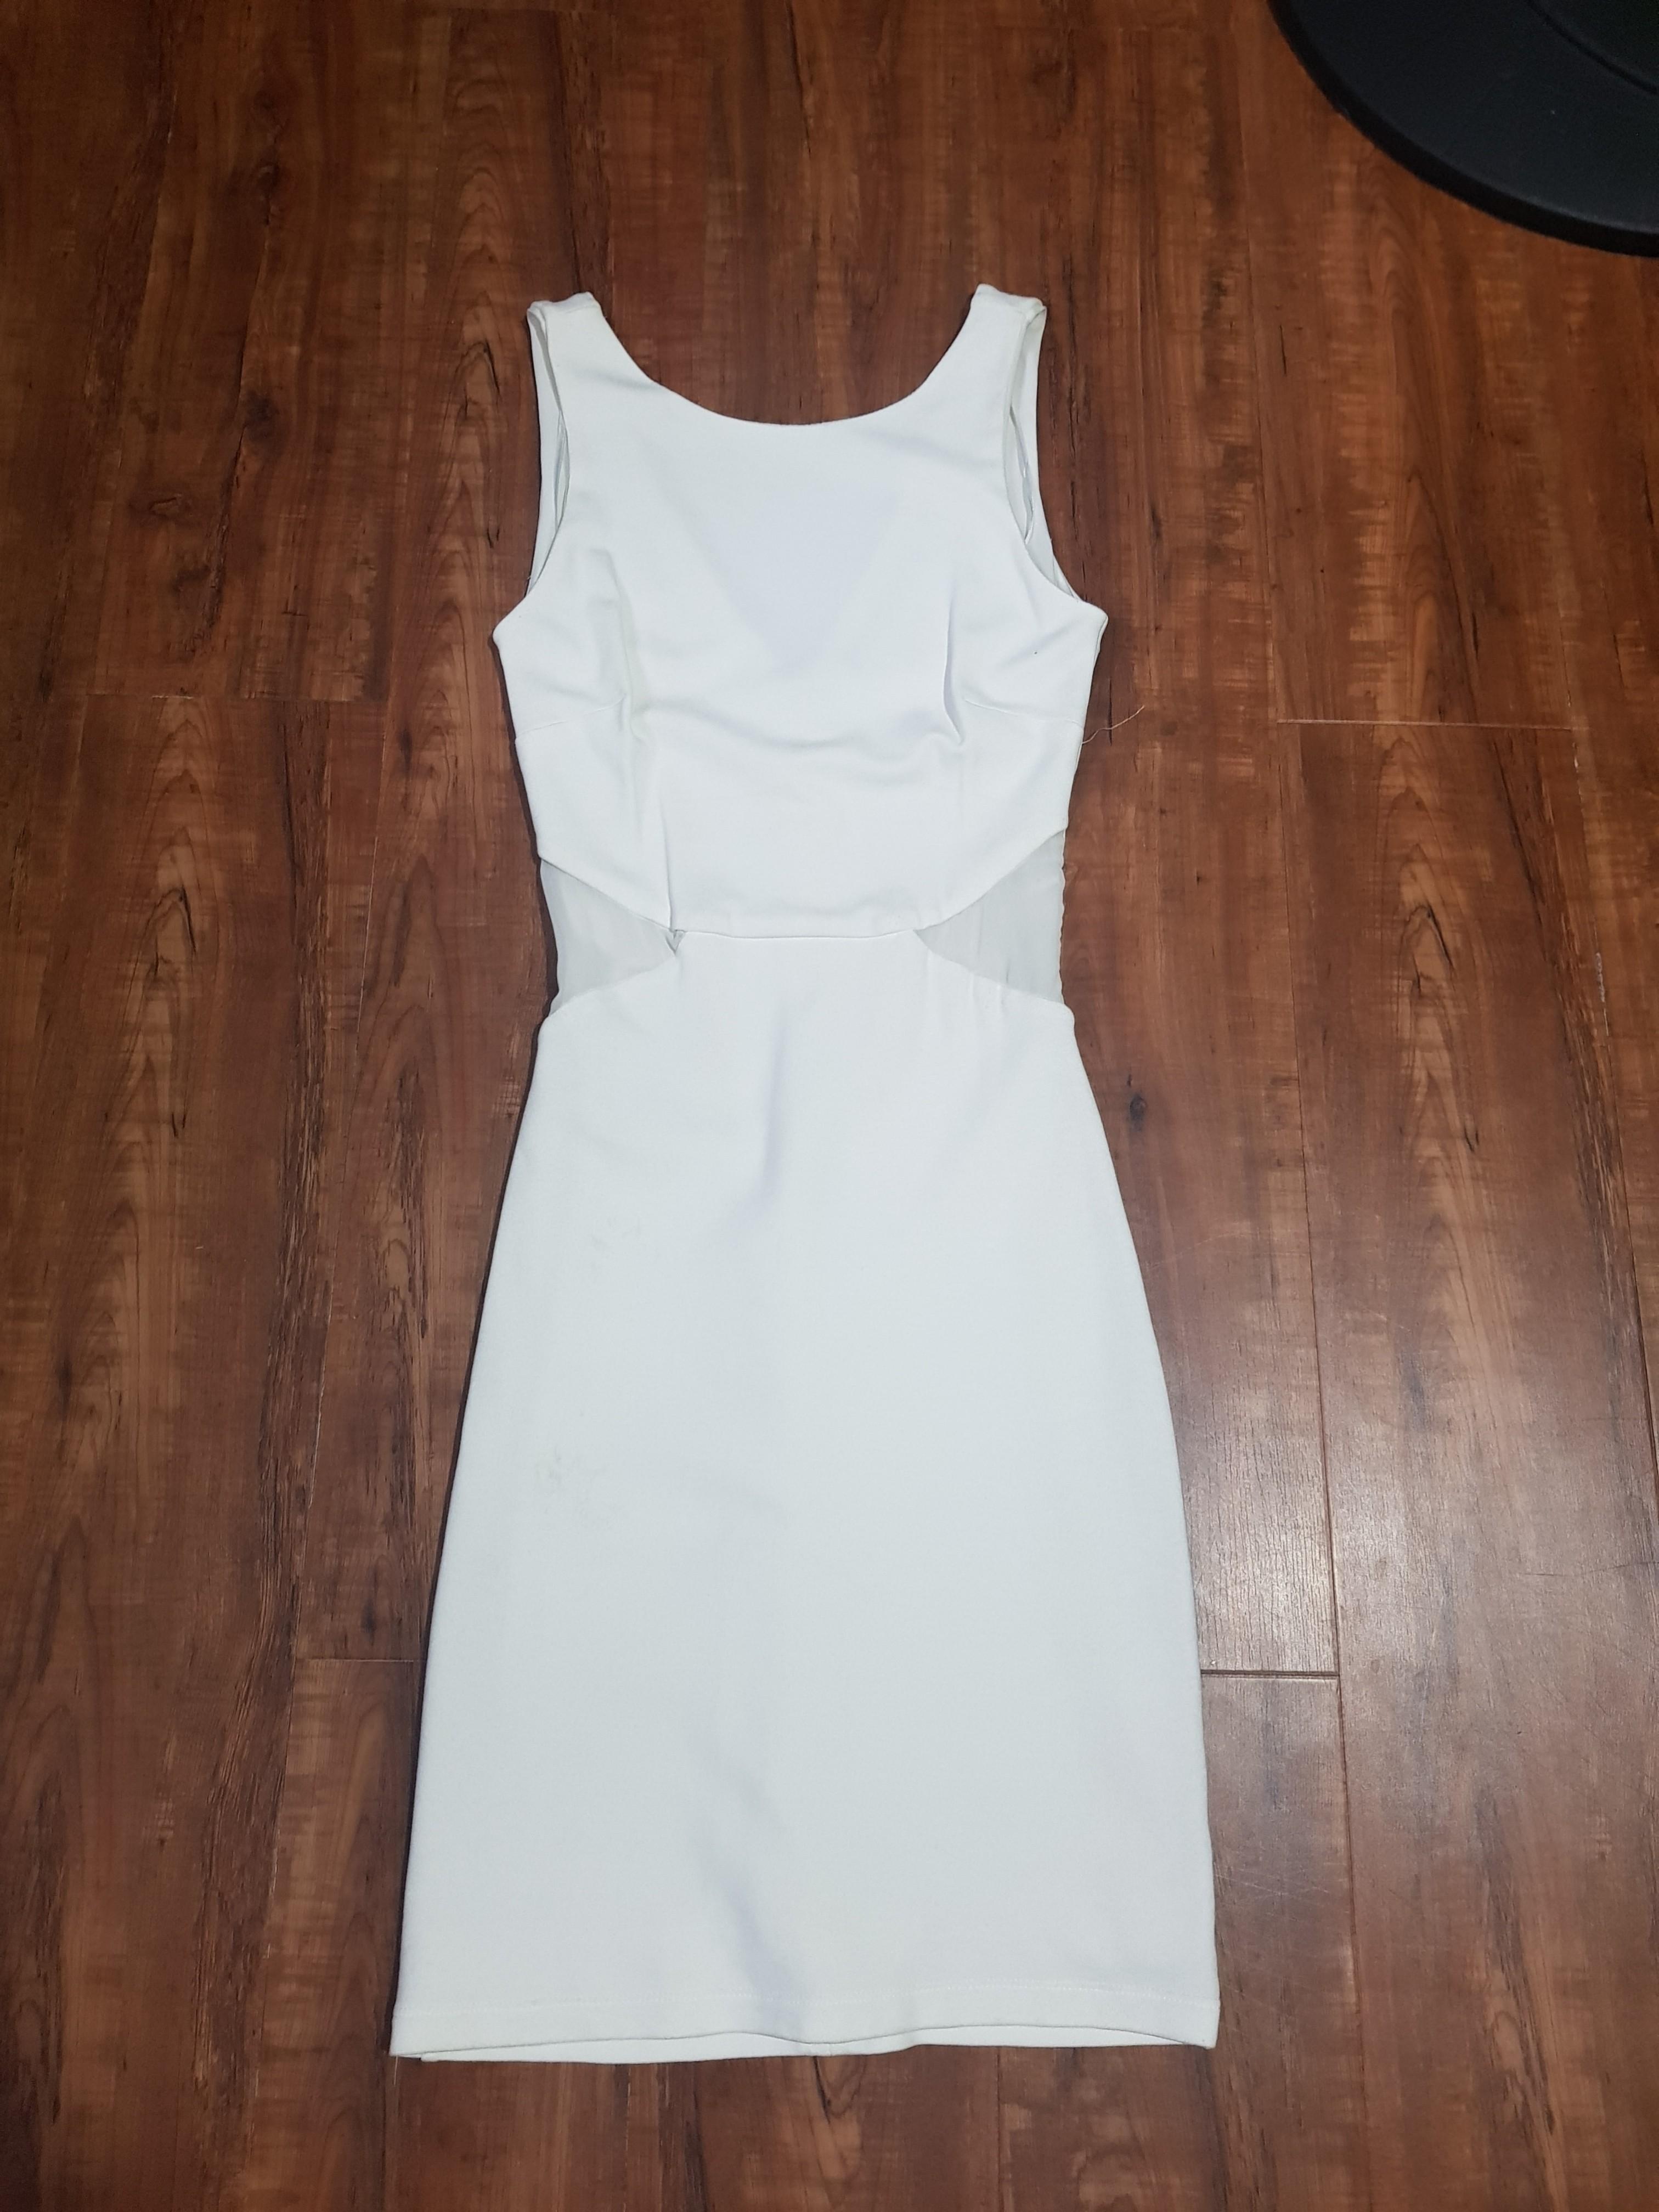 Zara White Bodycon Dress, Women's 